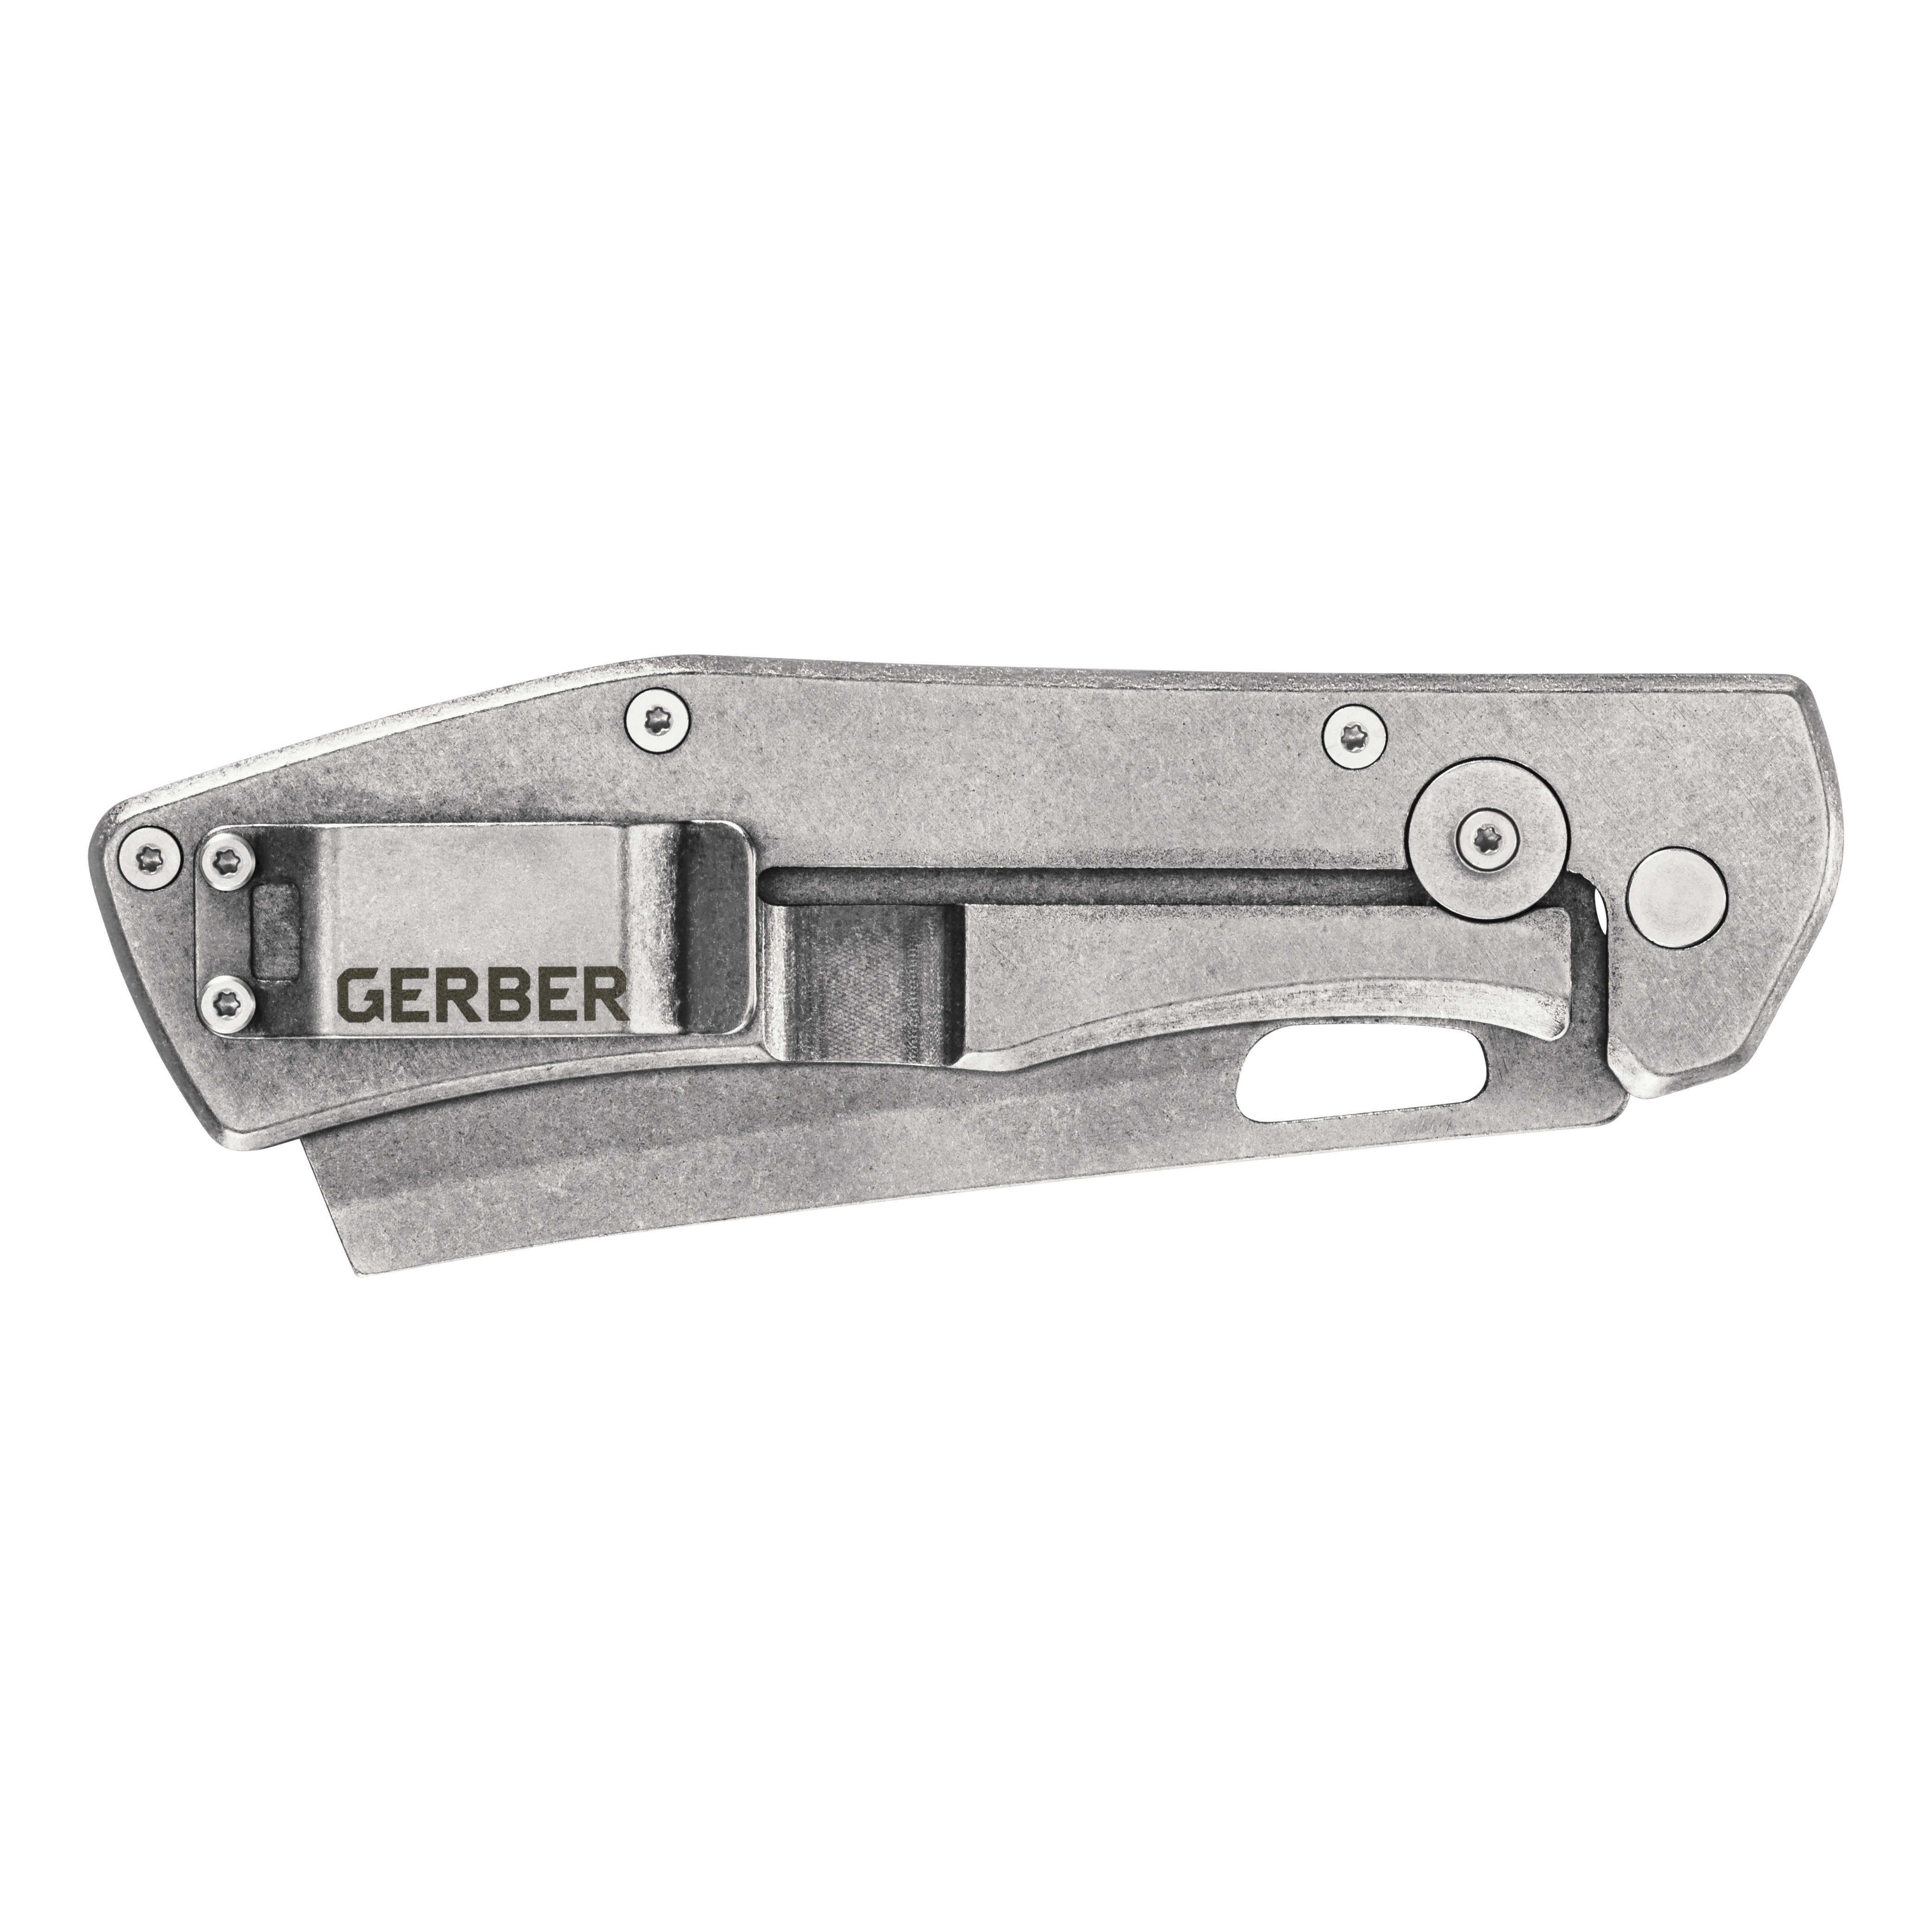 Gerber® Flat Iron Folding Knife - Closed View